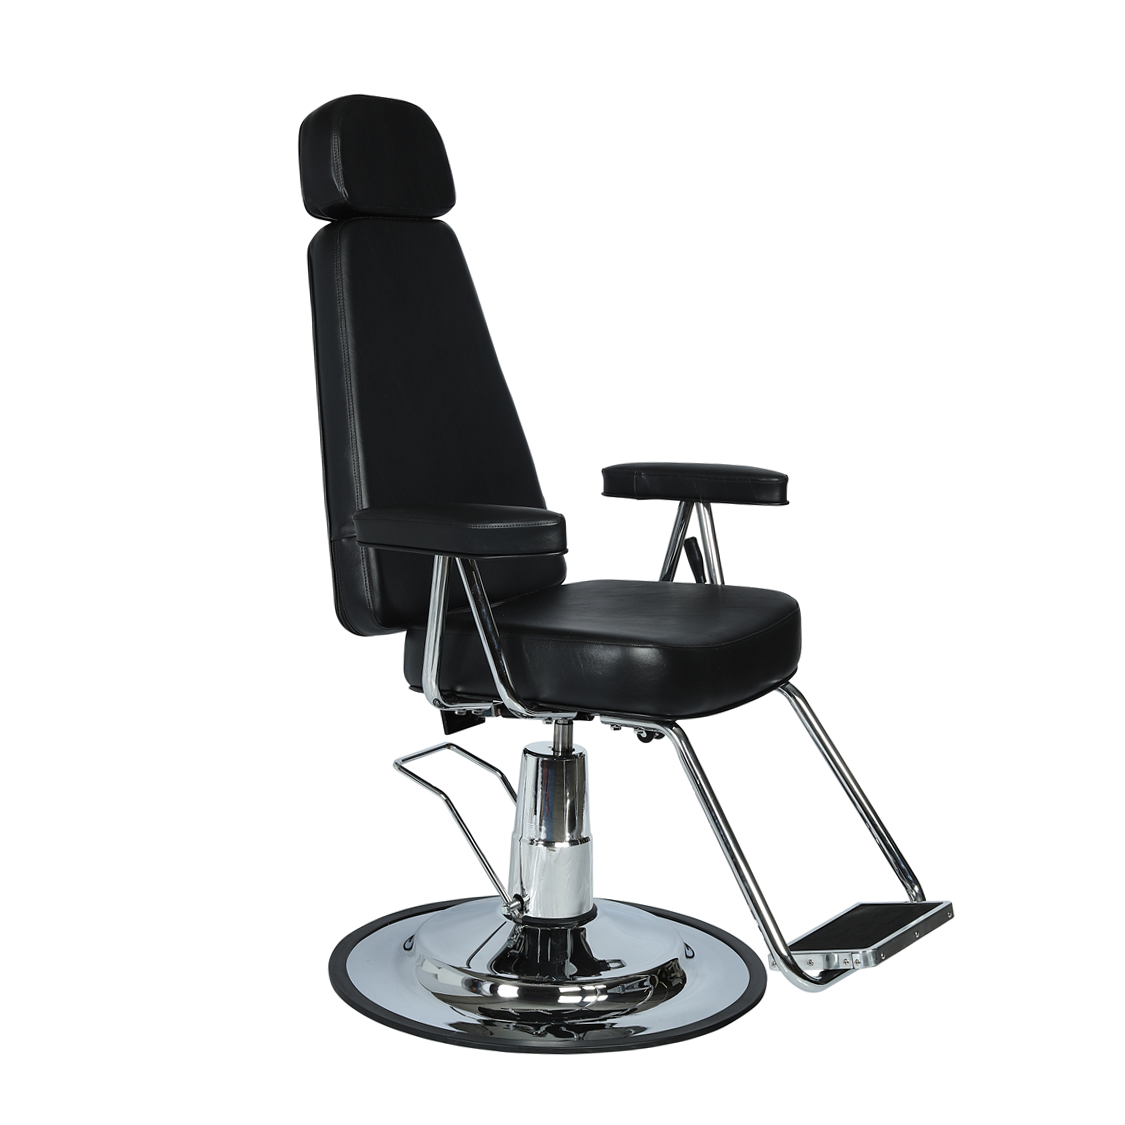 Carla Studio Makeup Chair - Garfield Commercial Enterprises Salon Equipment Spa Furniture Barber Chair Luxury